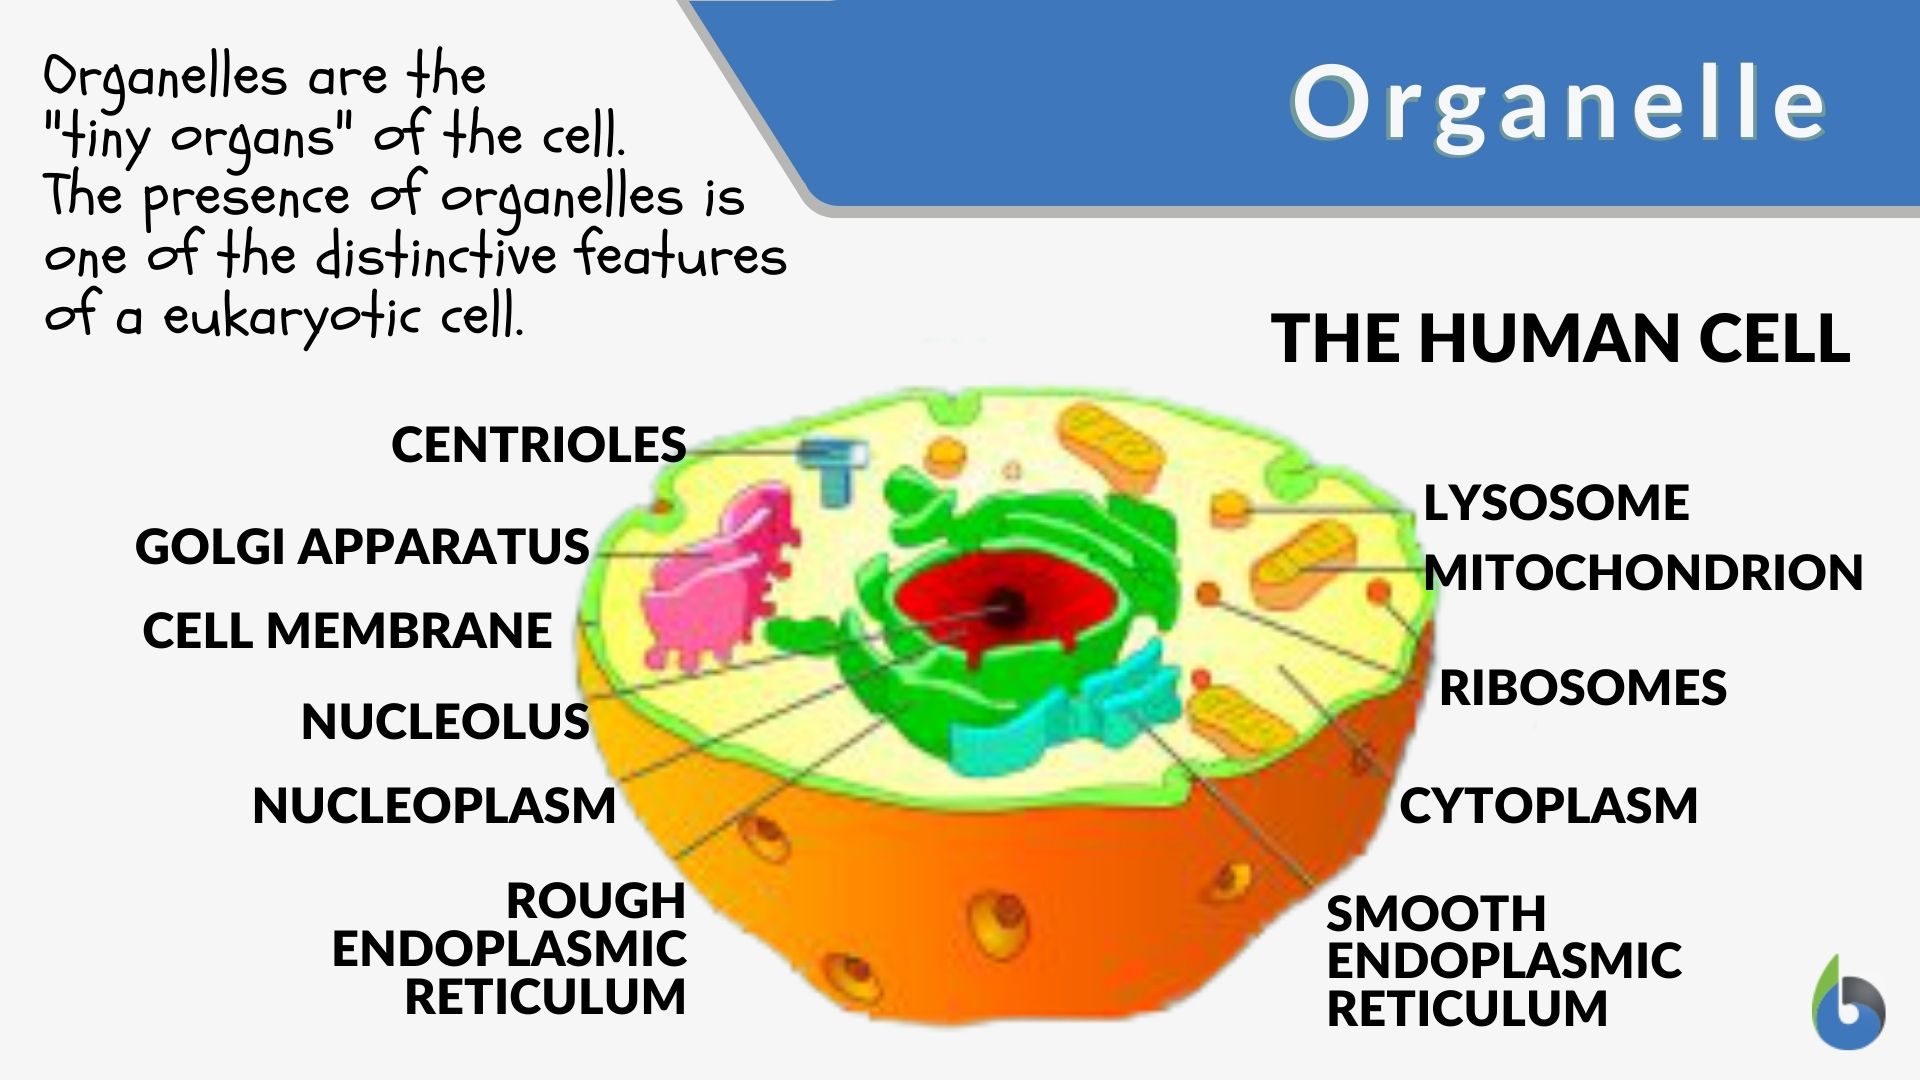 characteristics of ribosomes